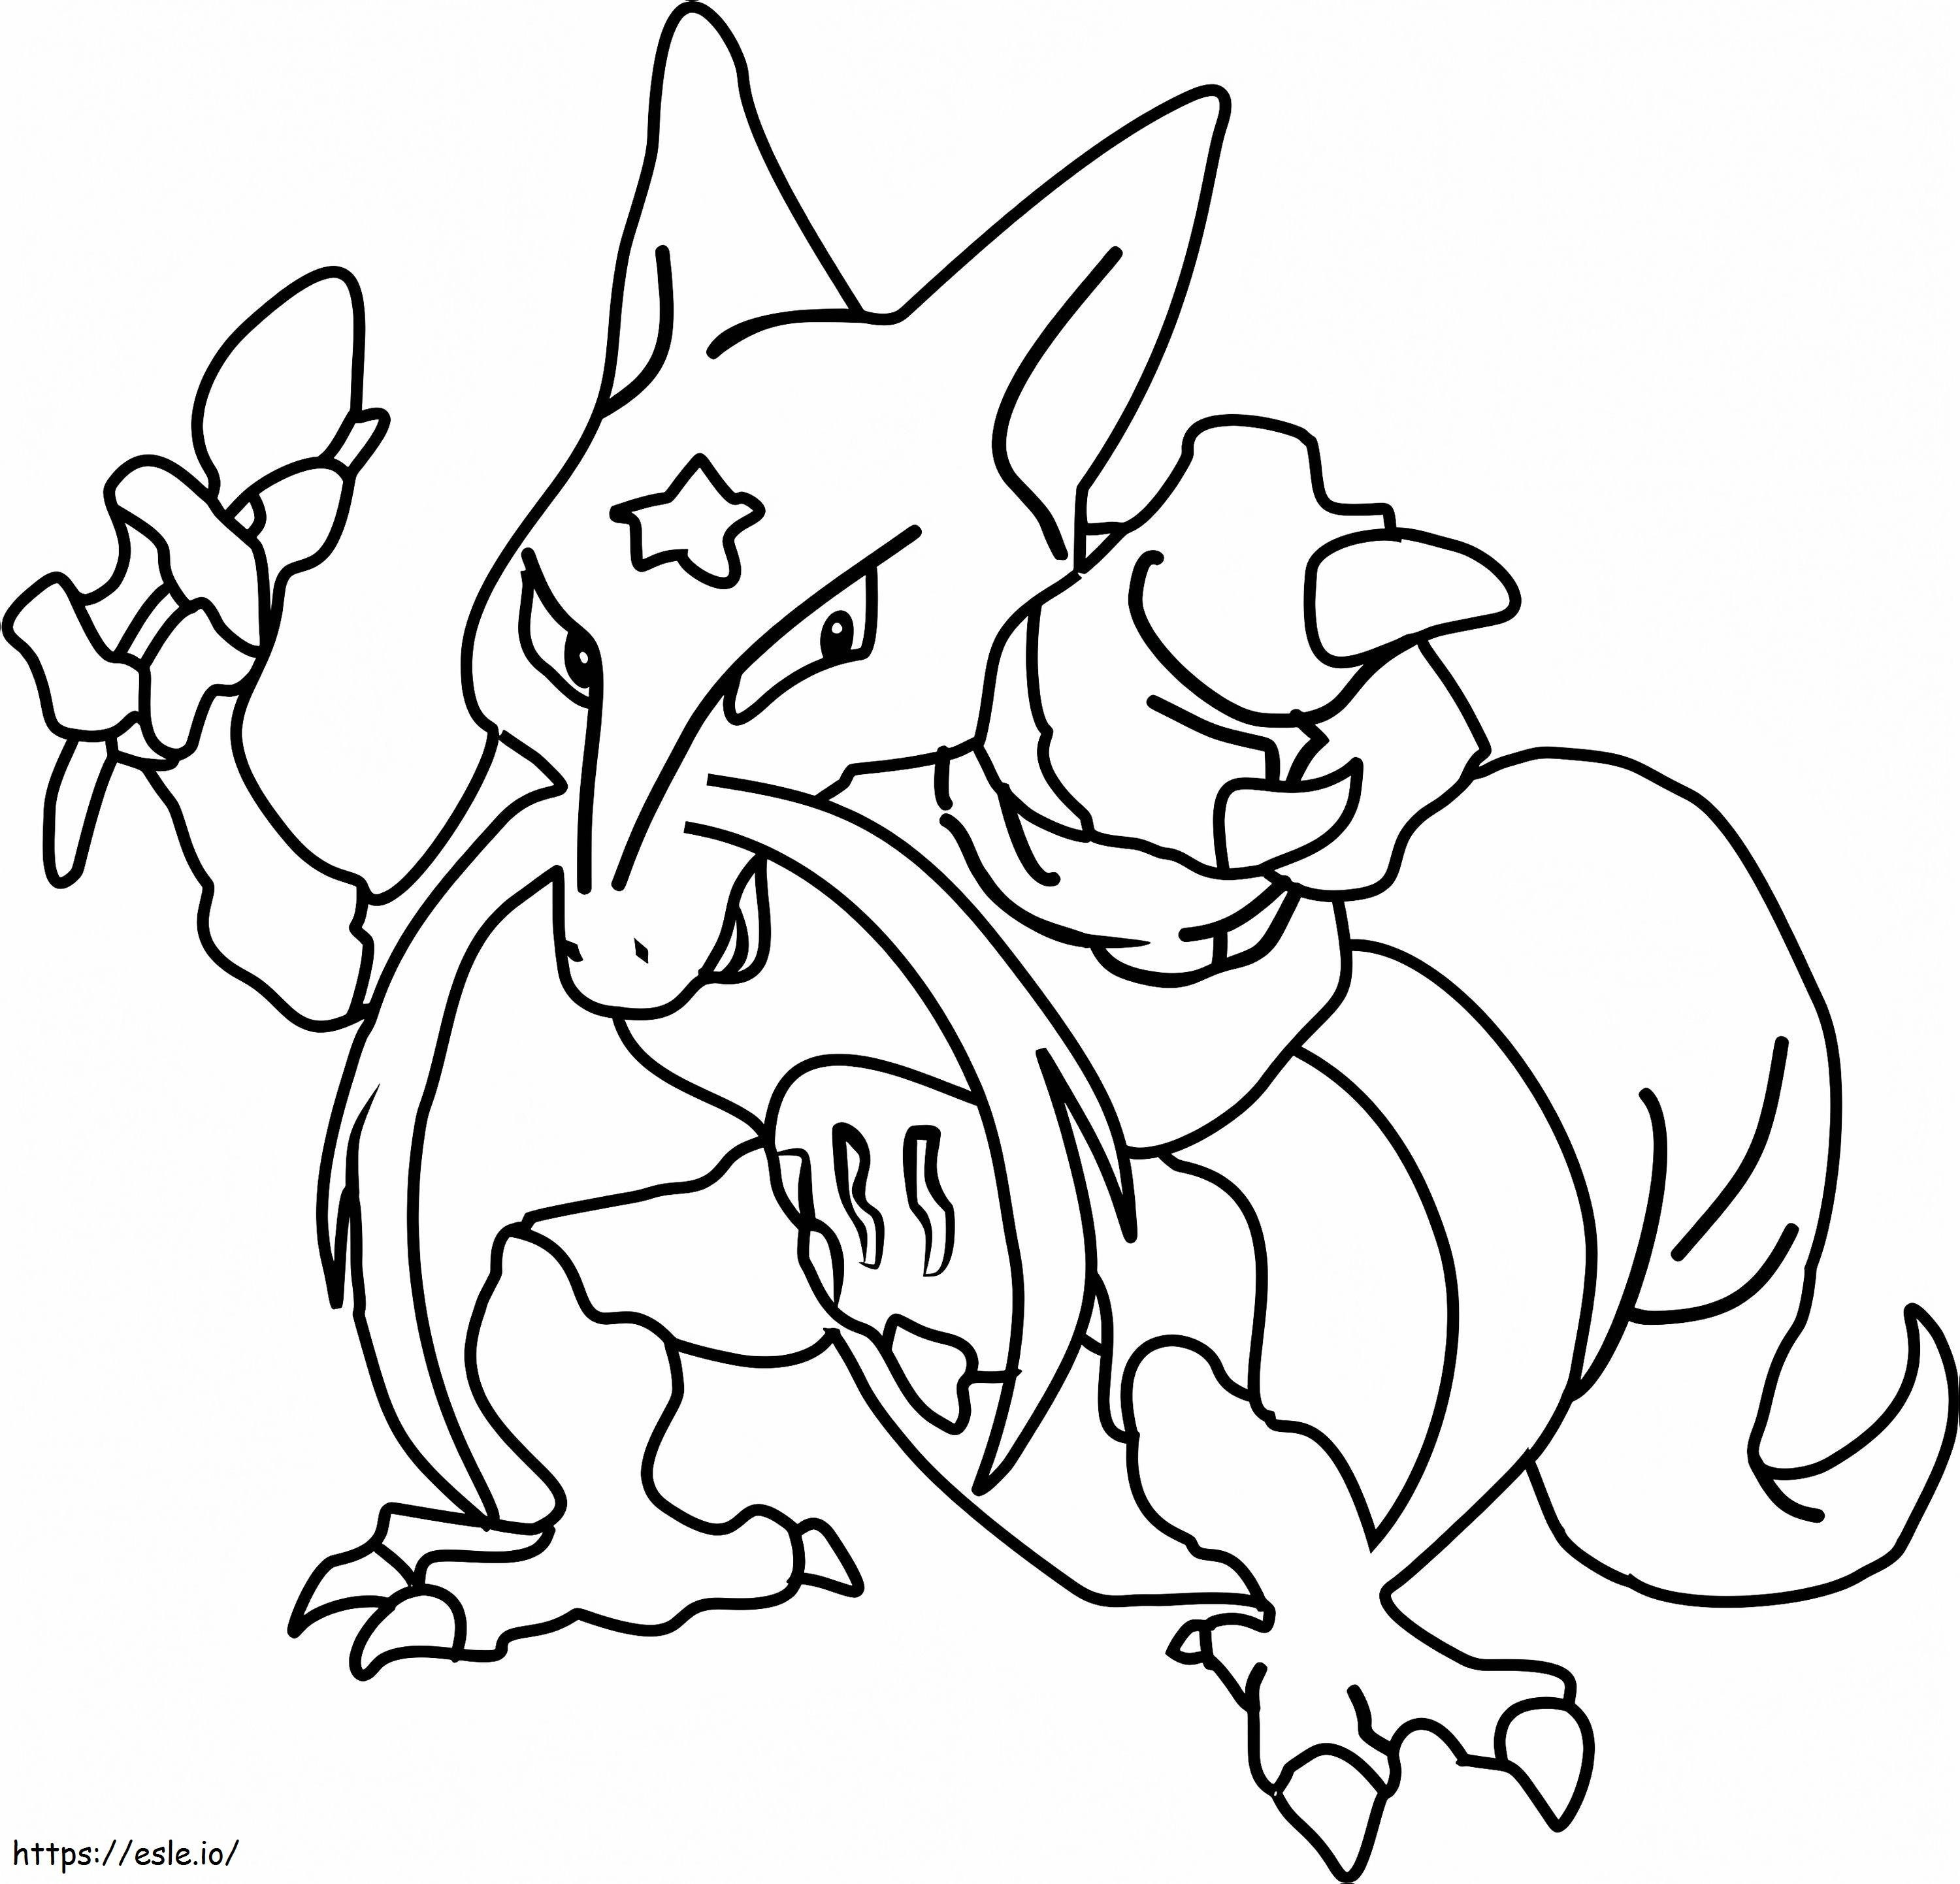 1530498873 Kadabra Pokemon1 coloring page